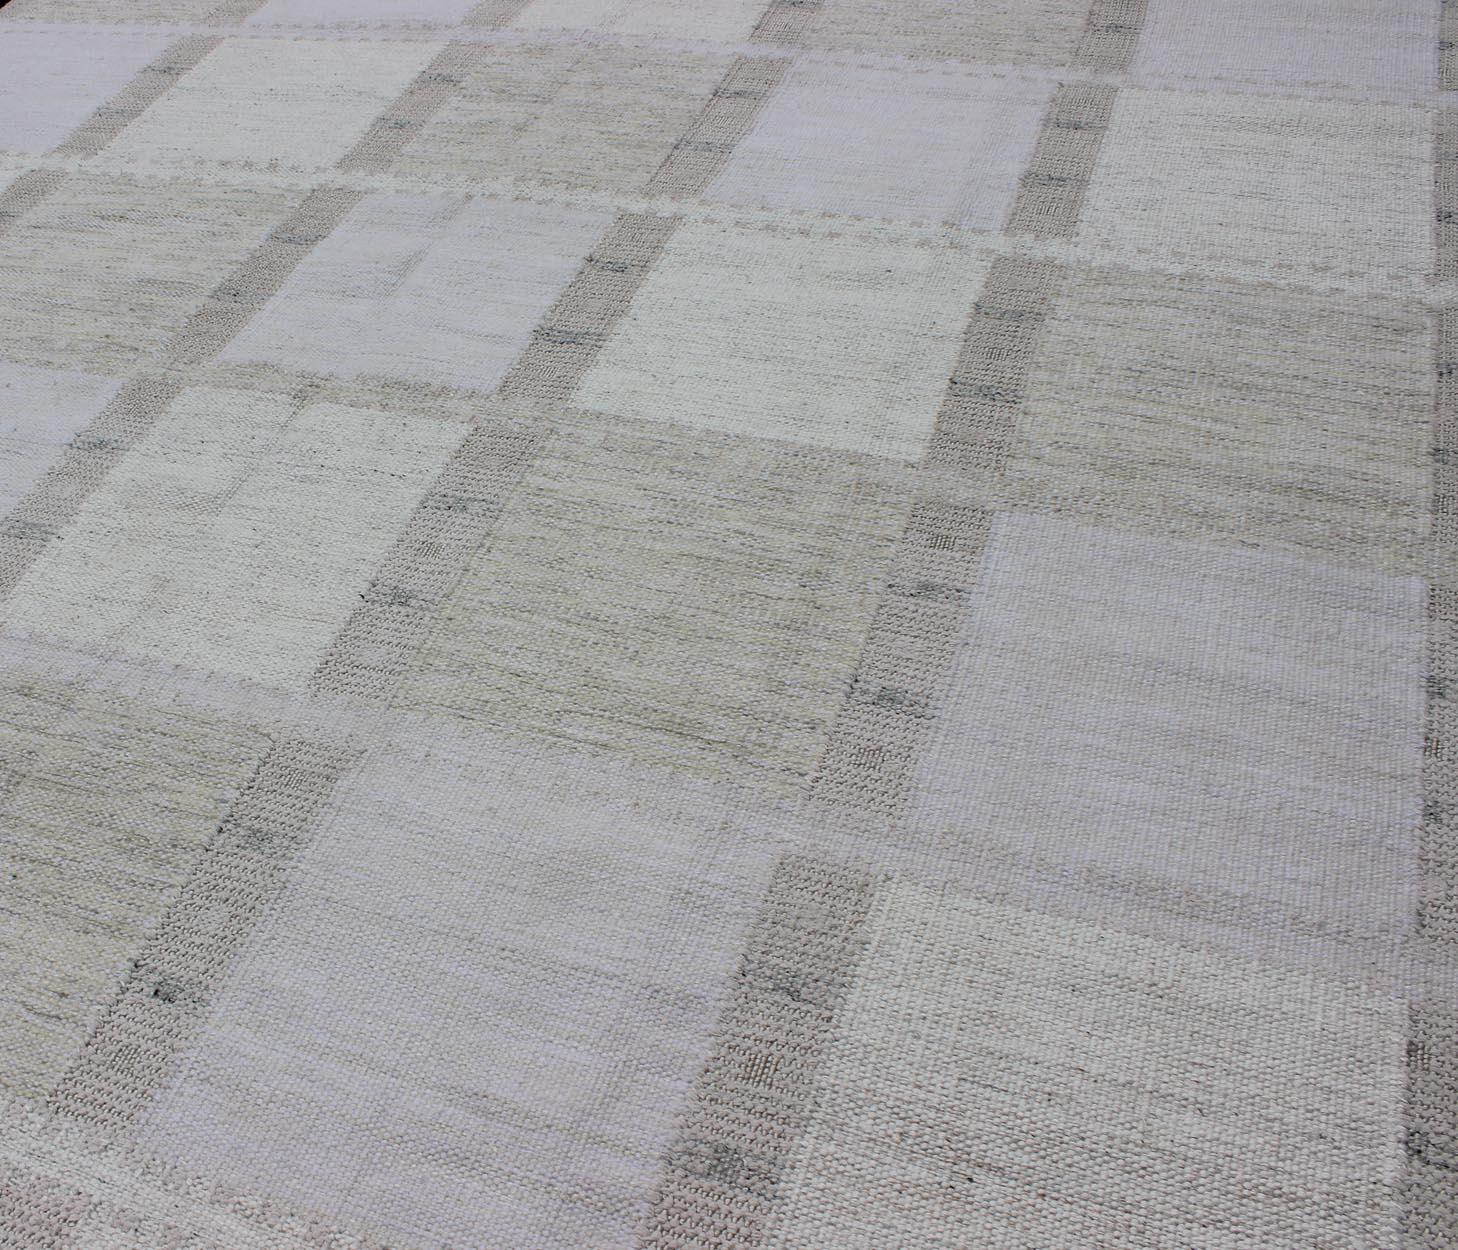 Modern Scandinavian Flat-Weave Rug Design with Checkerboard Design in Gray Tones For Sale 2